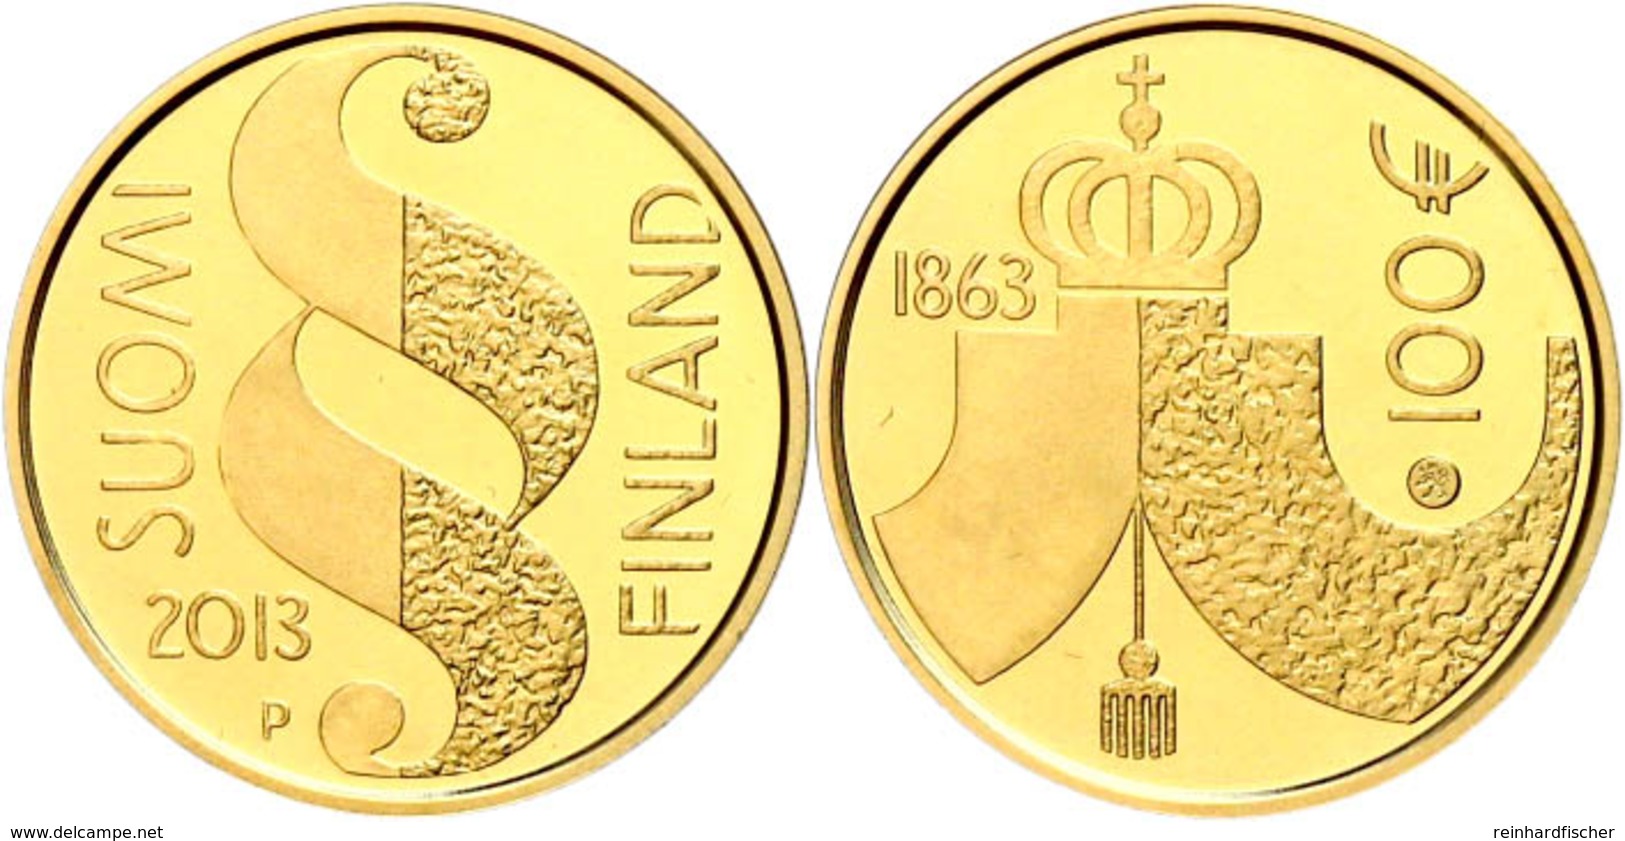 100 Euro, Gold, 2003, 150 Jahre Erste Parlamentssitzung, 5,18 G Fein, In Kapsel, In Originalausgabeschatulle Der Mint Of - Finland